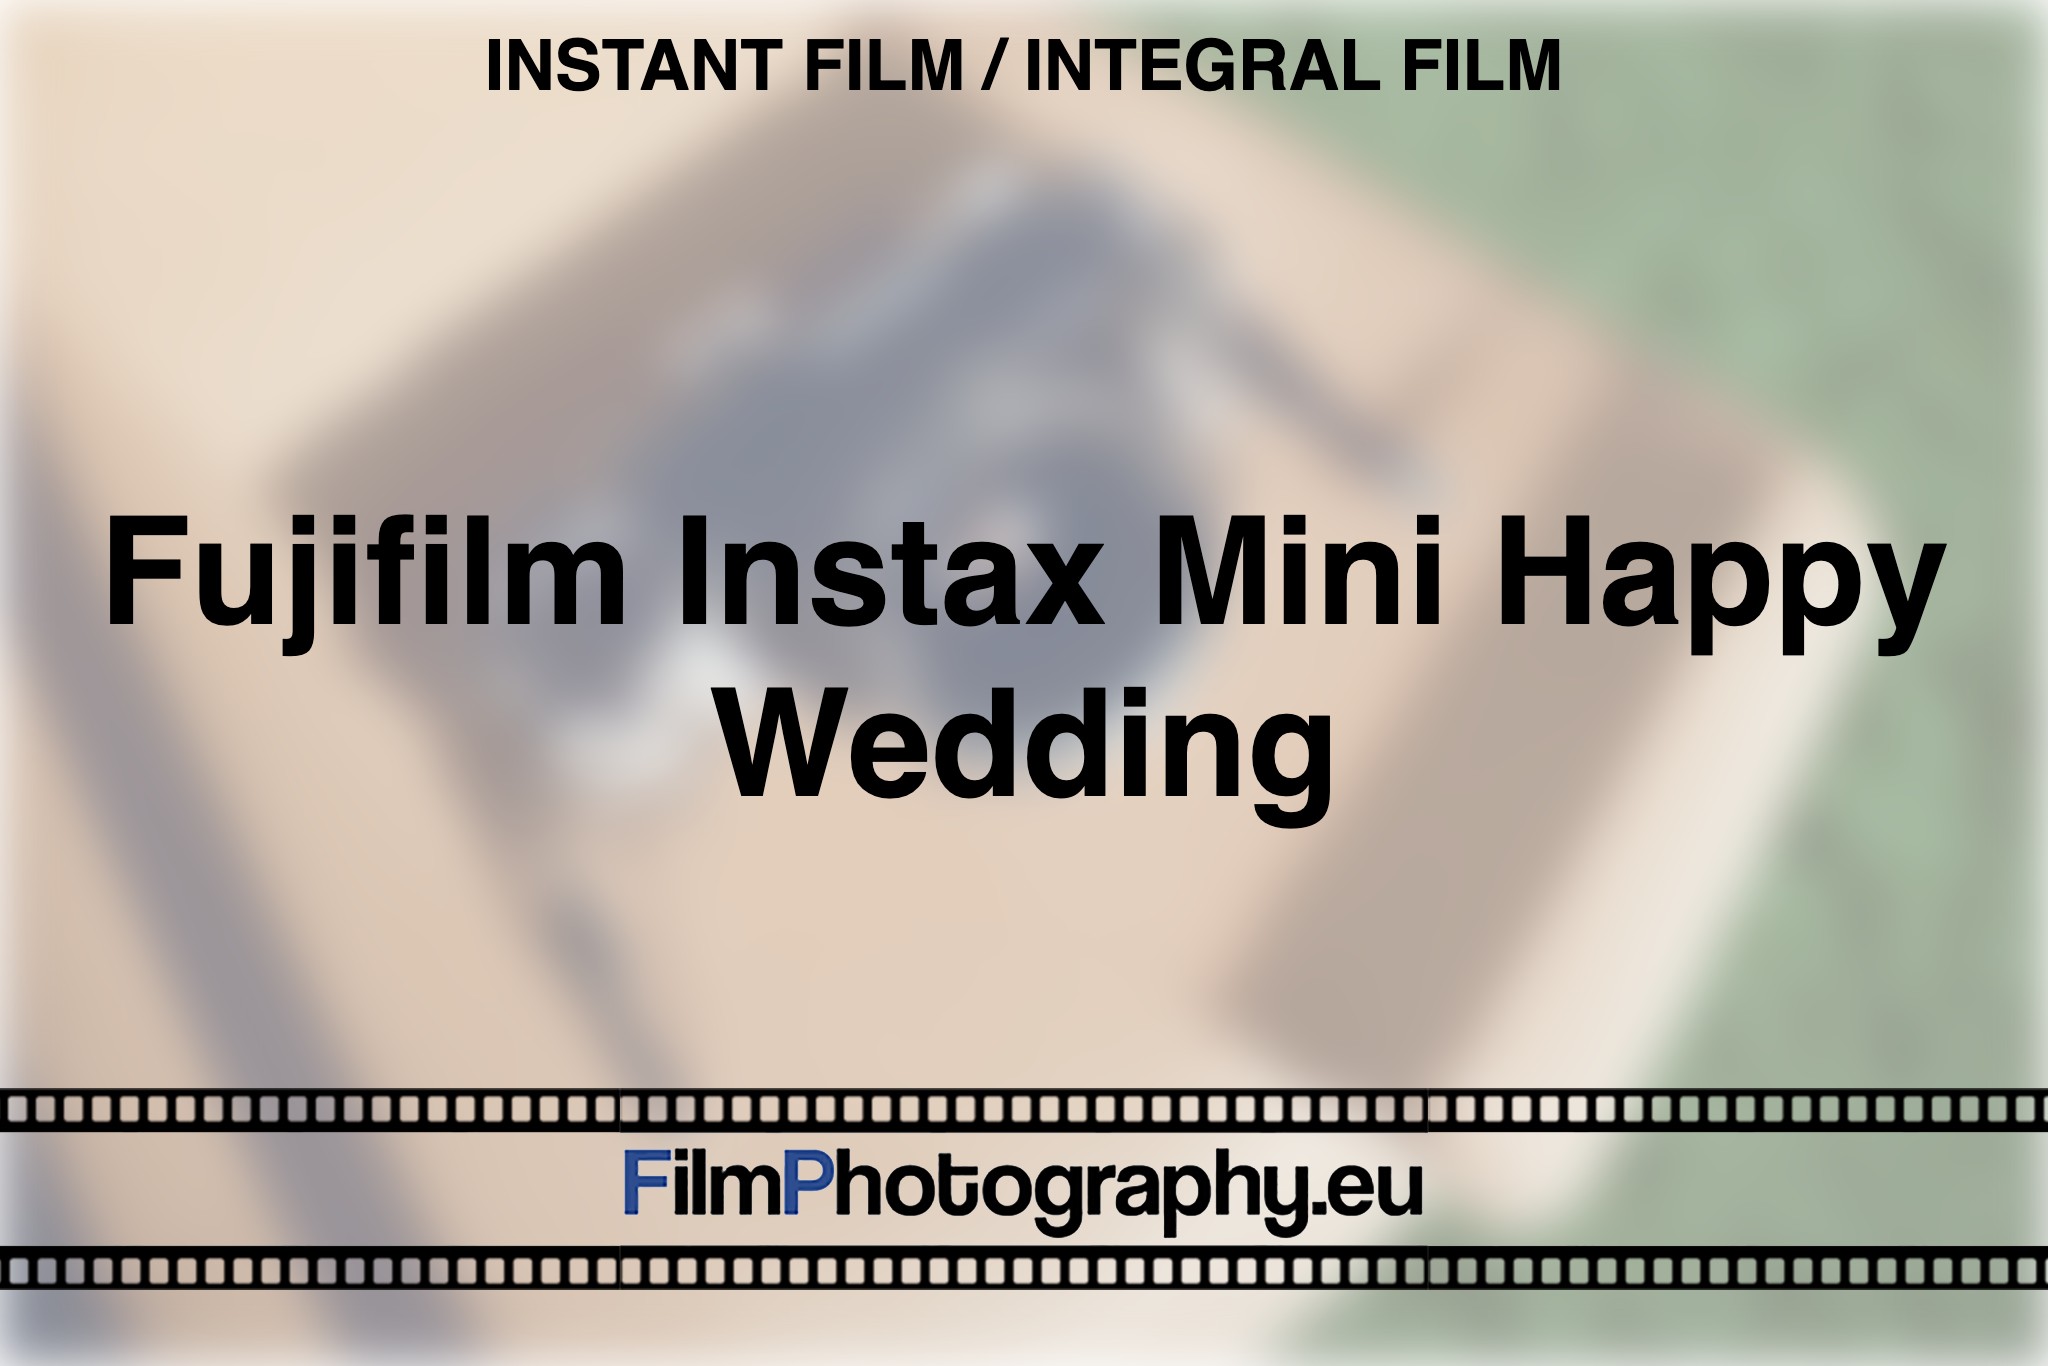 fujifilm-instax-mini-happy-wedding-instant-film-integral-film-bnv